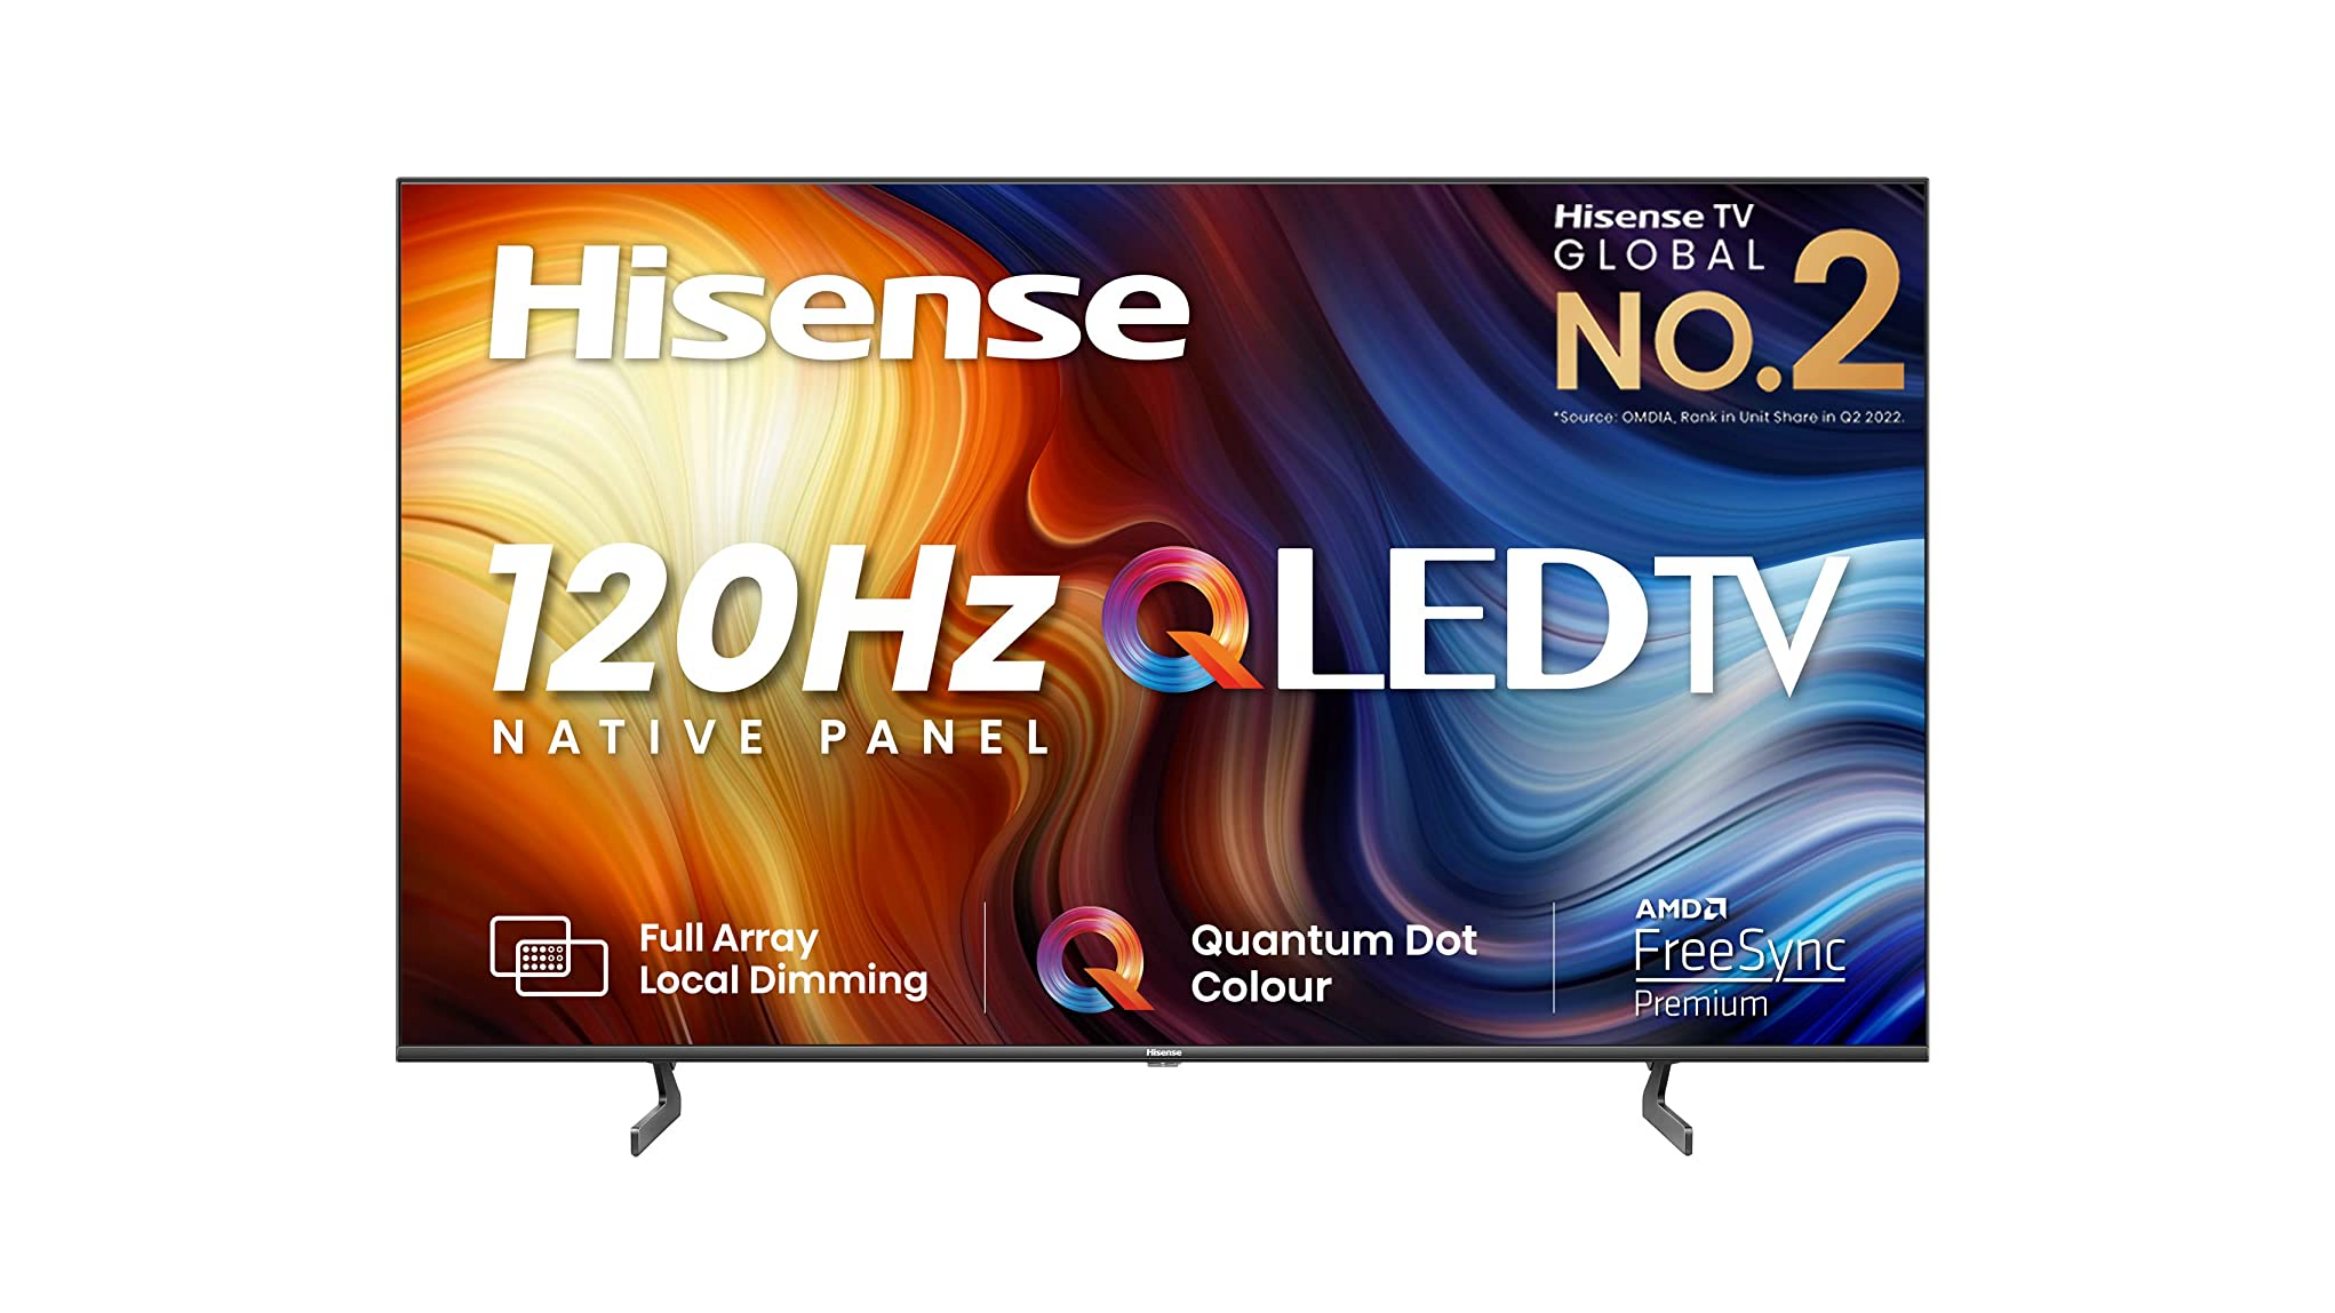 Hisense new TV